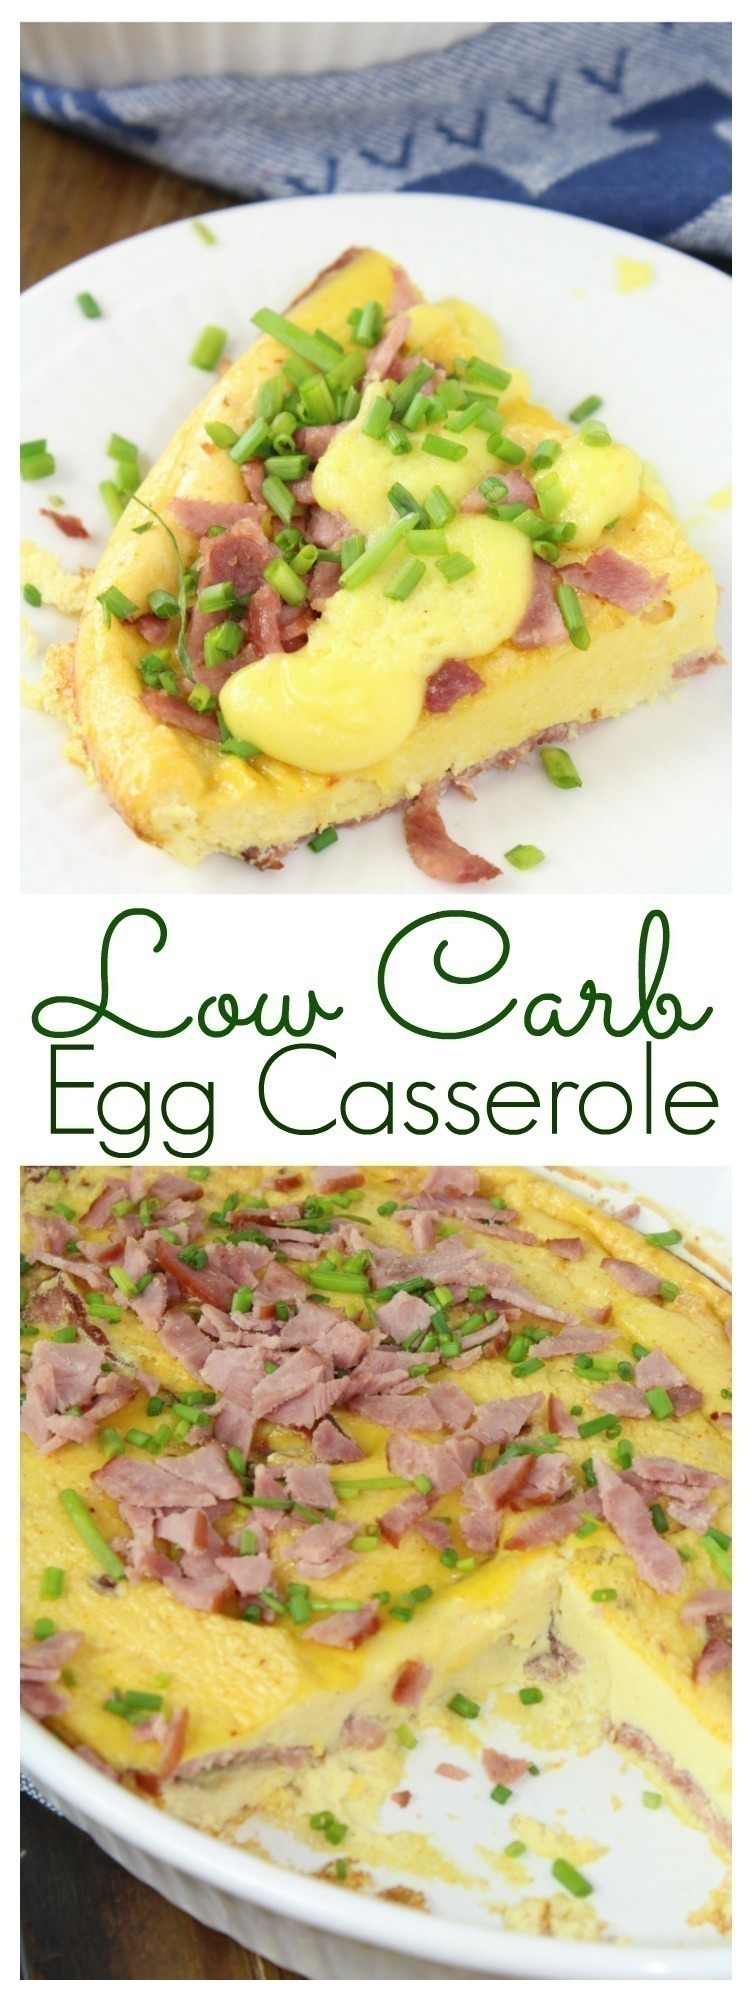 Combine eggs with your favorite breakfast meat in a delightful, low carb, breakfast casserole.